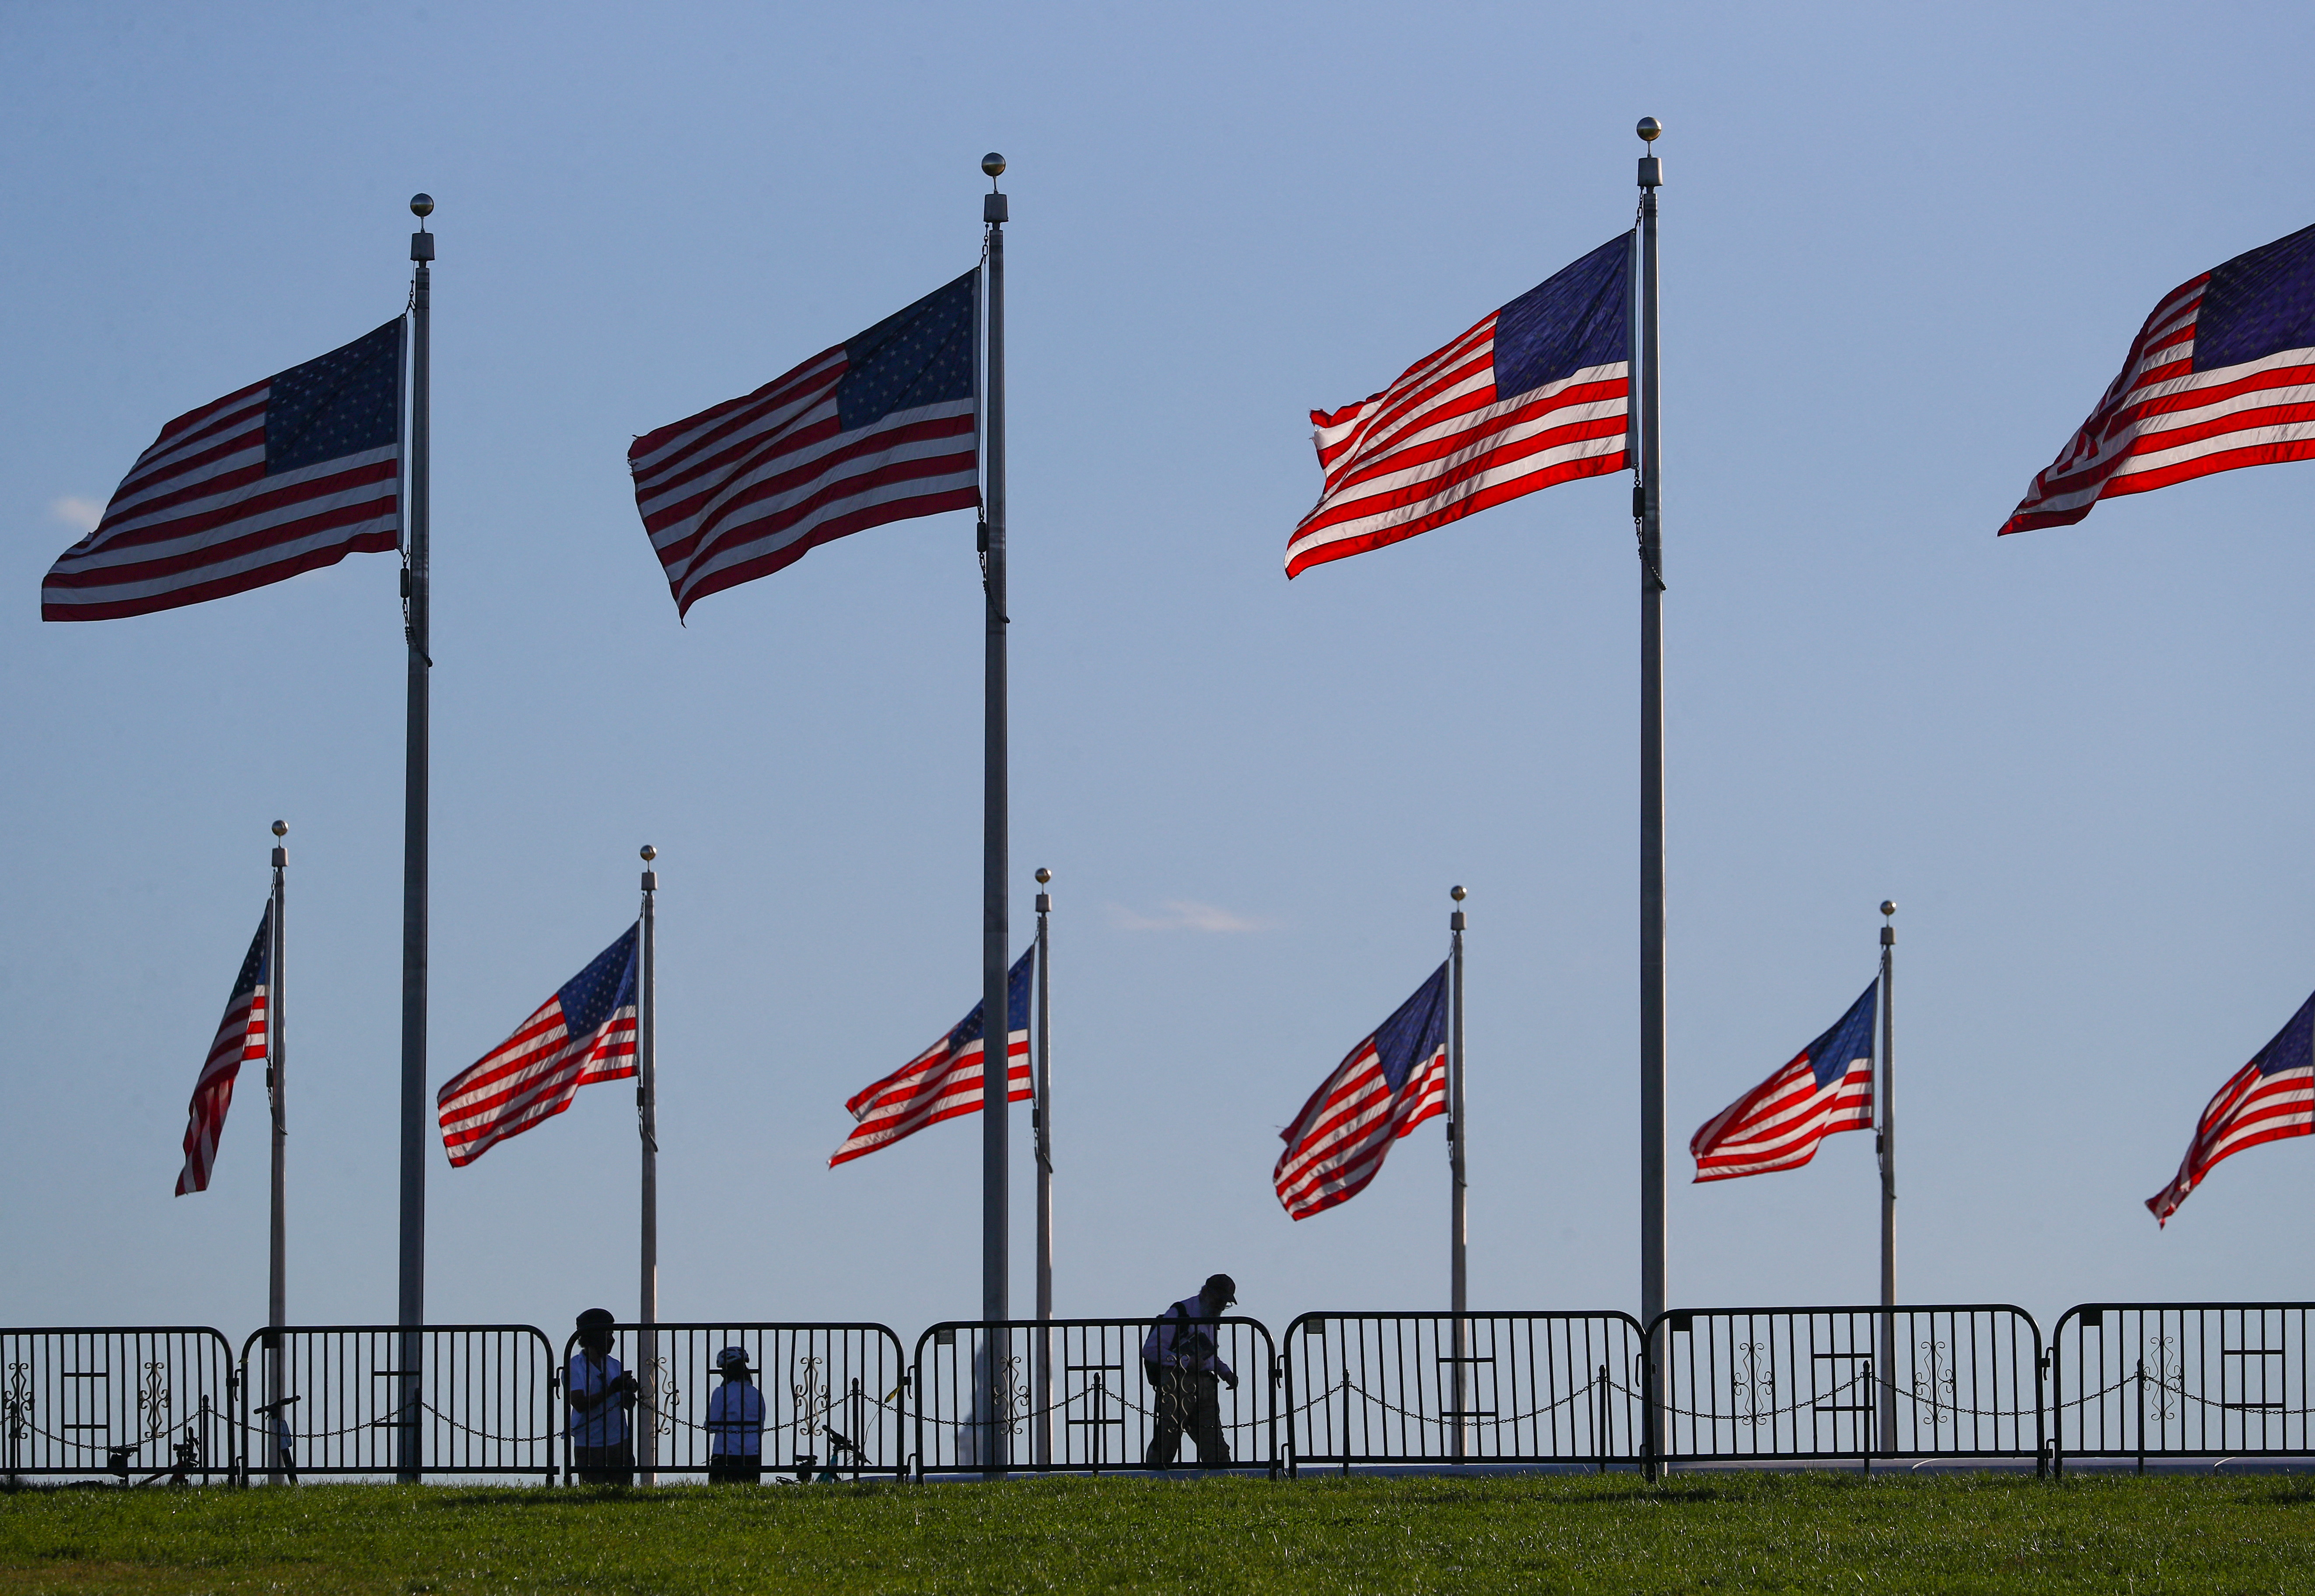 People walk beneath U.S. flags surrounding the Washington monument on the National mall, near the White House in Washington